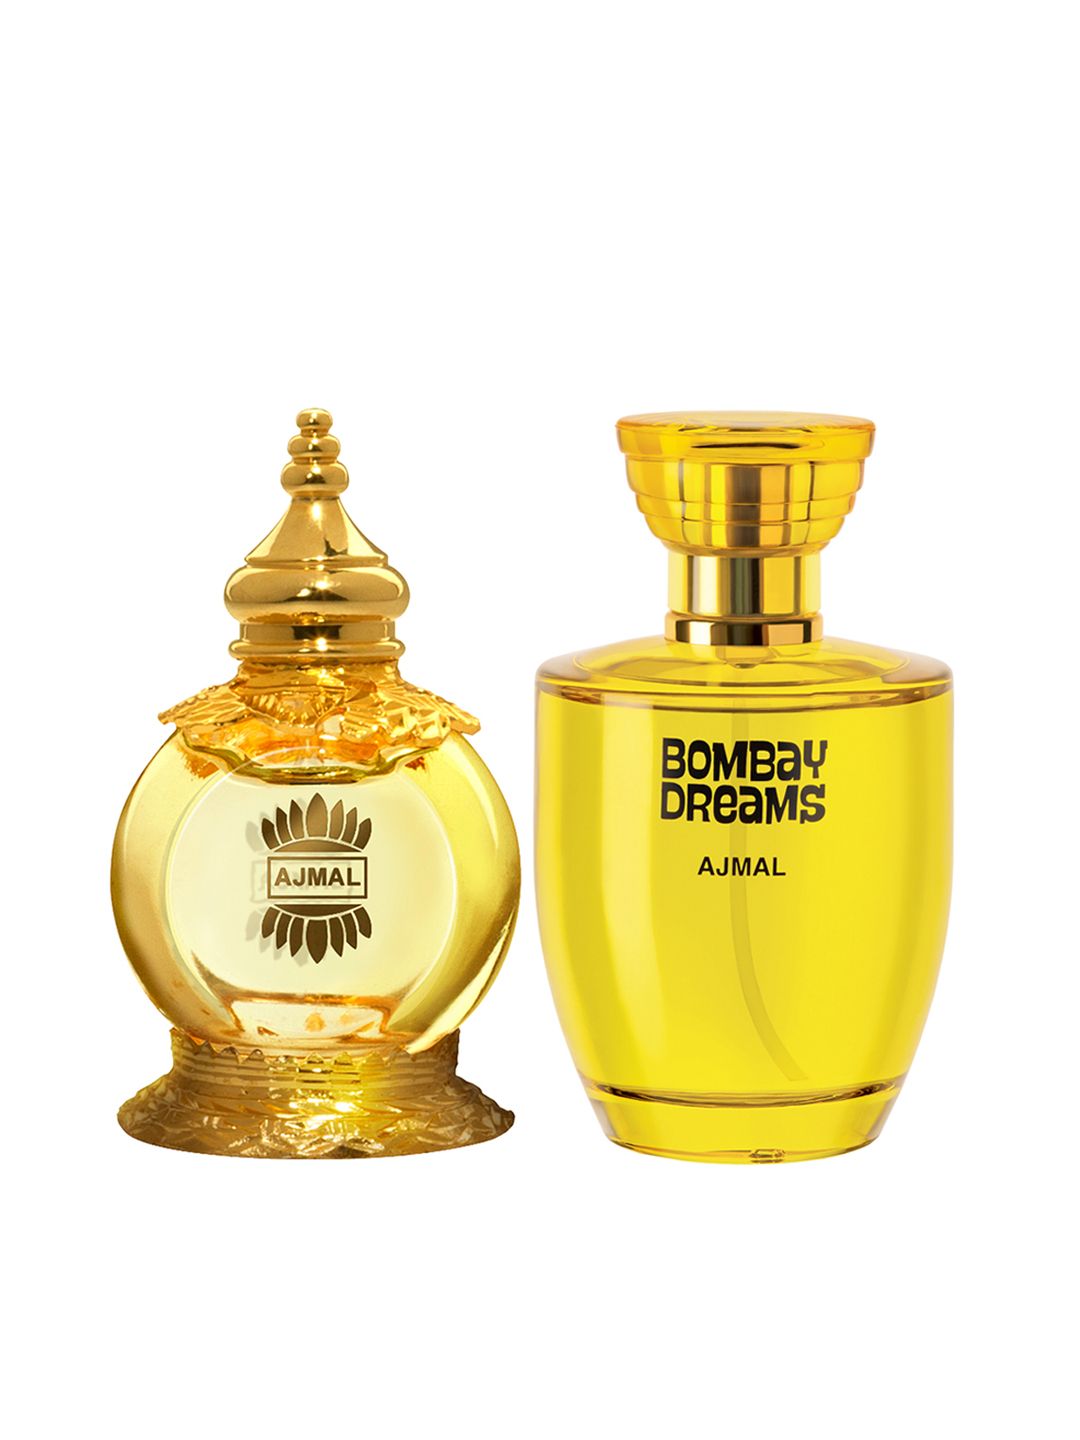 Ajmal Unisex Set of 2 Bombay Dreams EDP Perfume Scent 100ml & MukhallatAlWafa Attar 12 ml Price in India